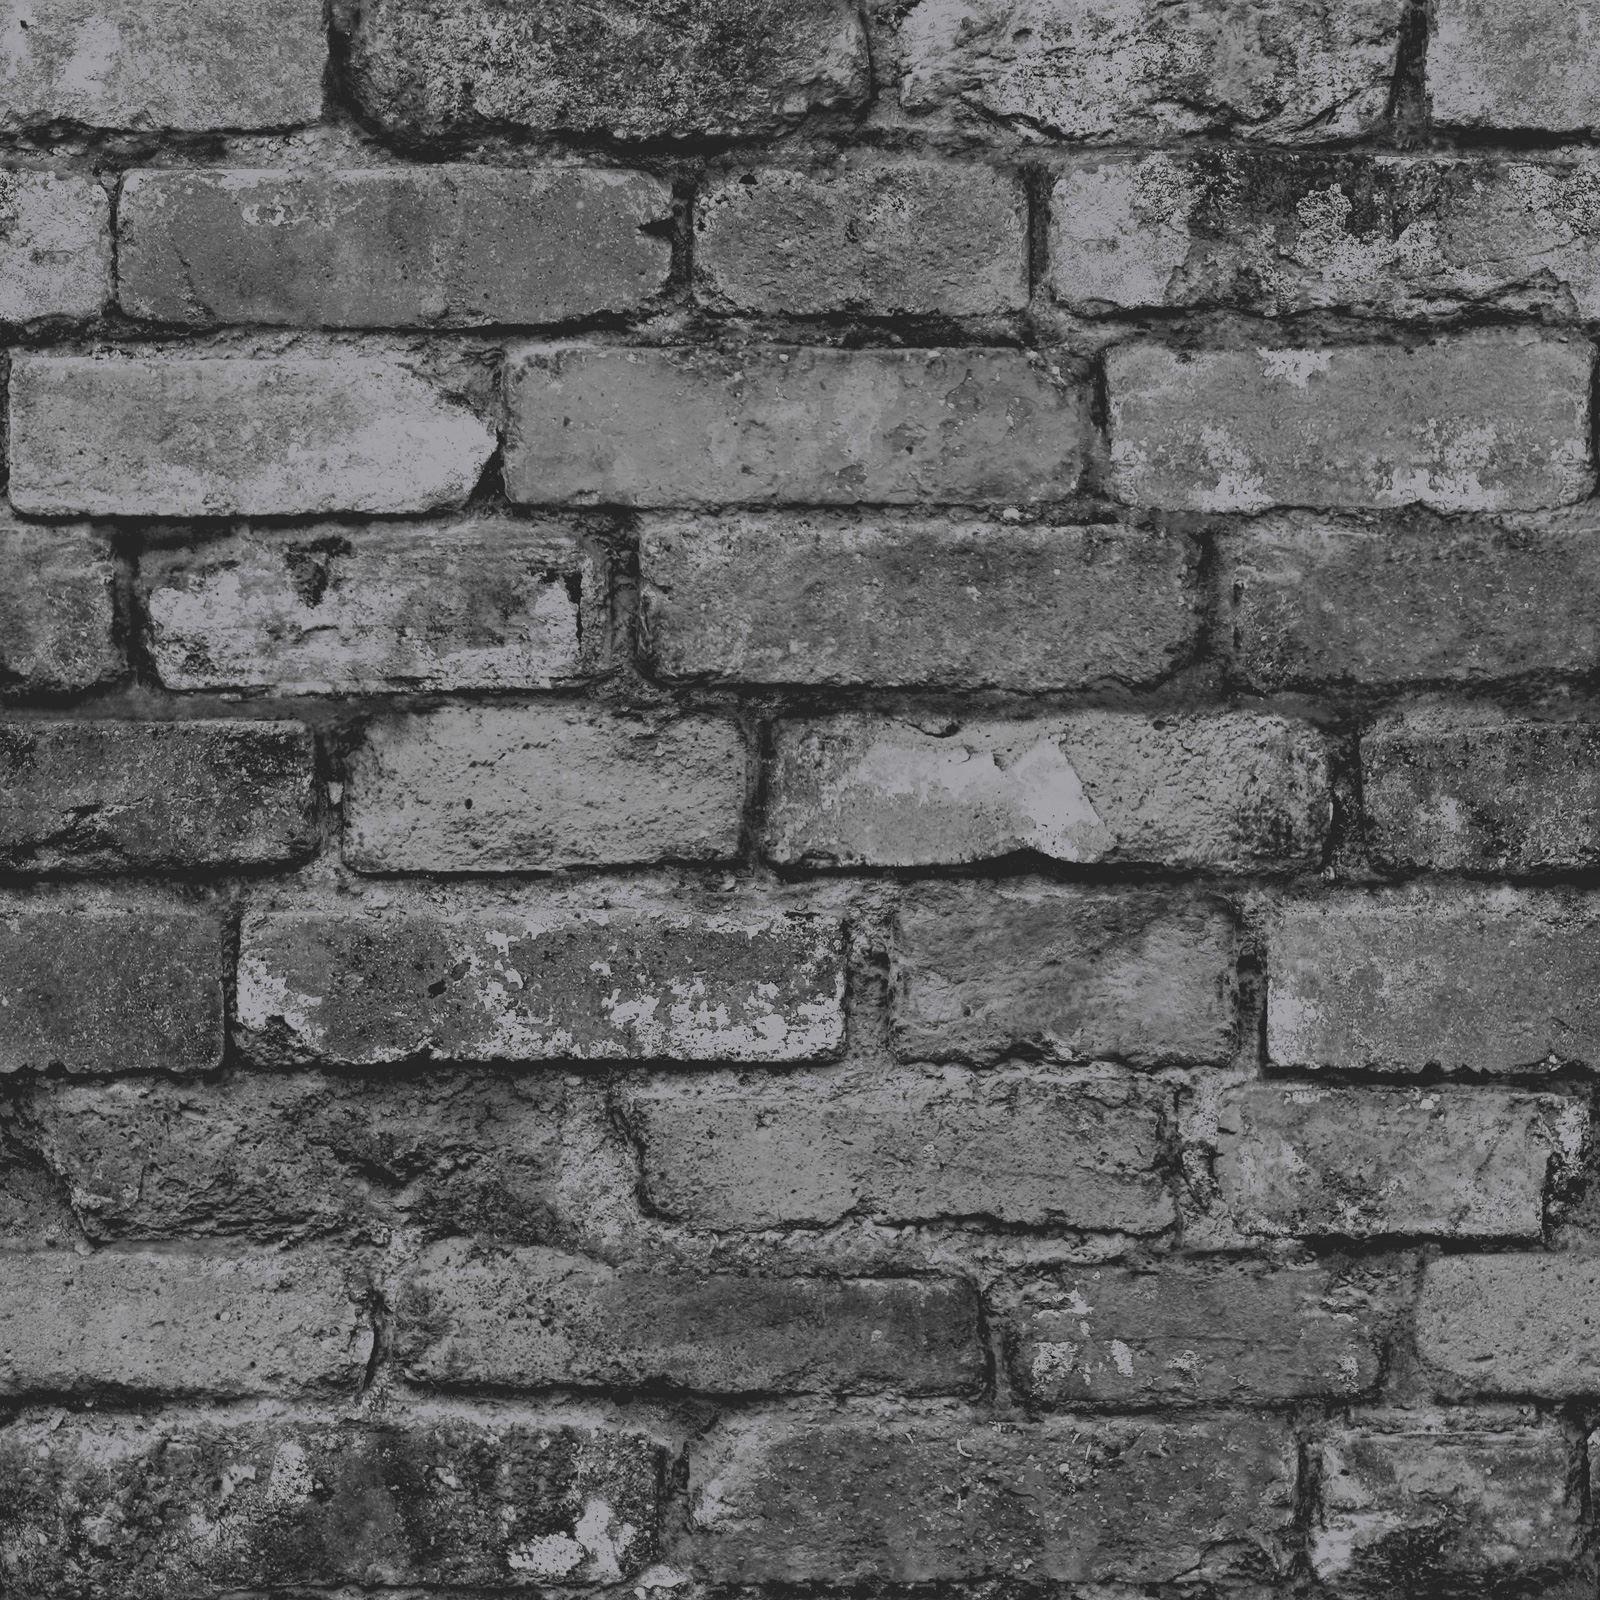 Brick Wall Images  Free Download on Freepik